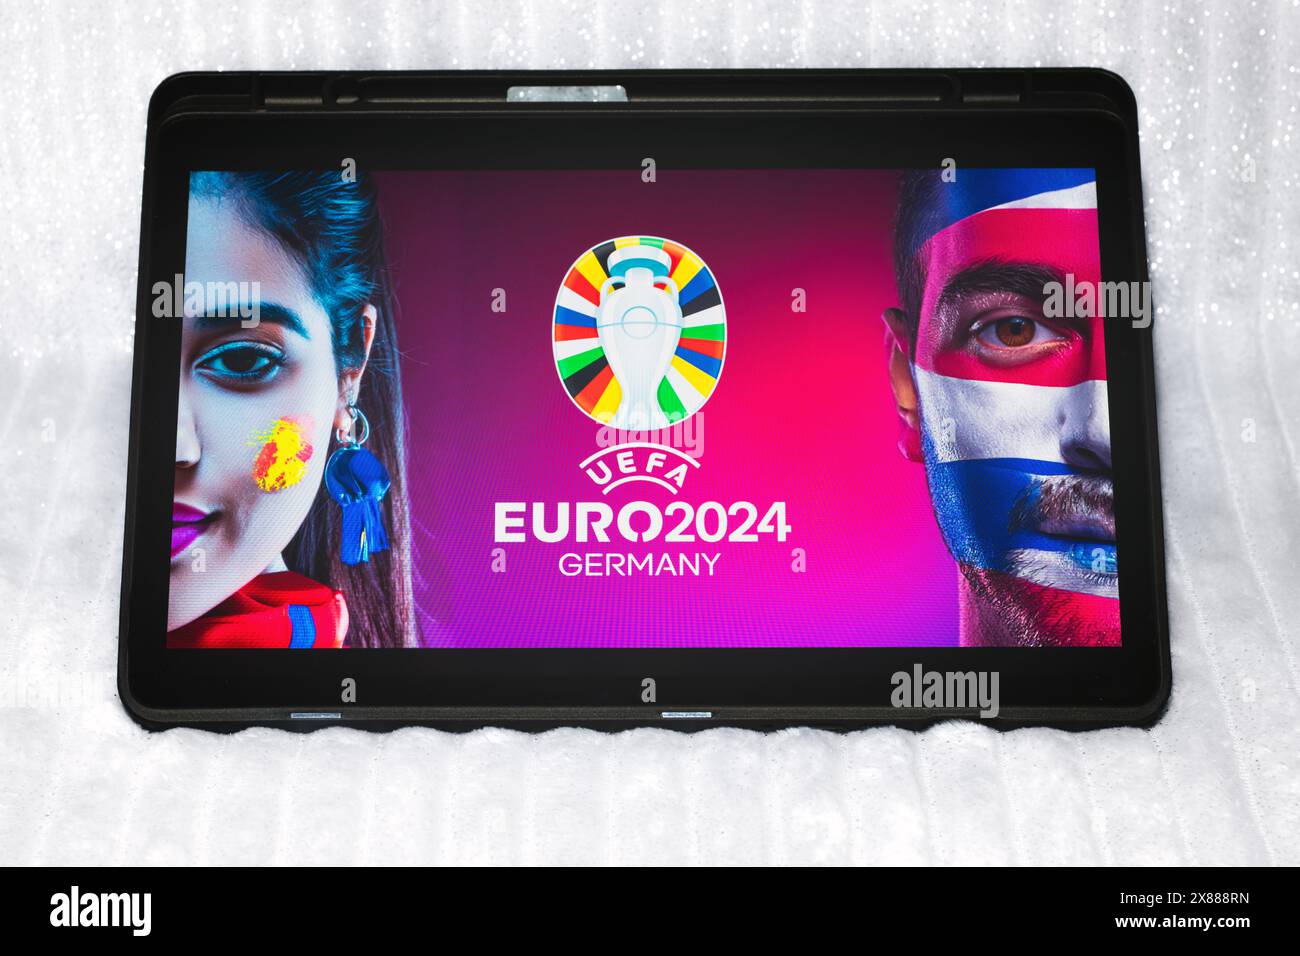 UEFA European Football Championship 2024 wallpaper on a tablet screen Stock Photo